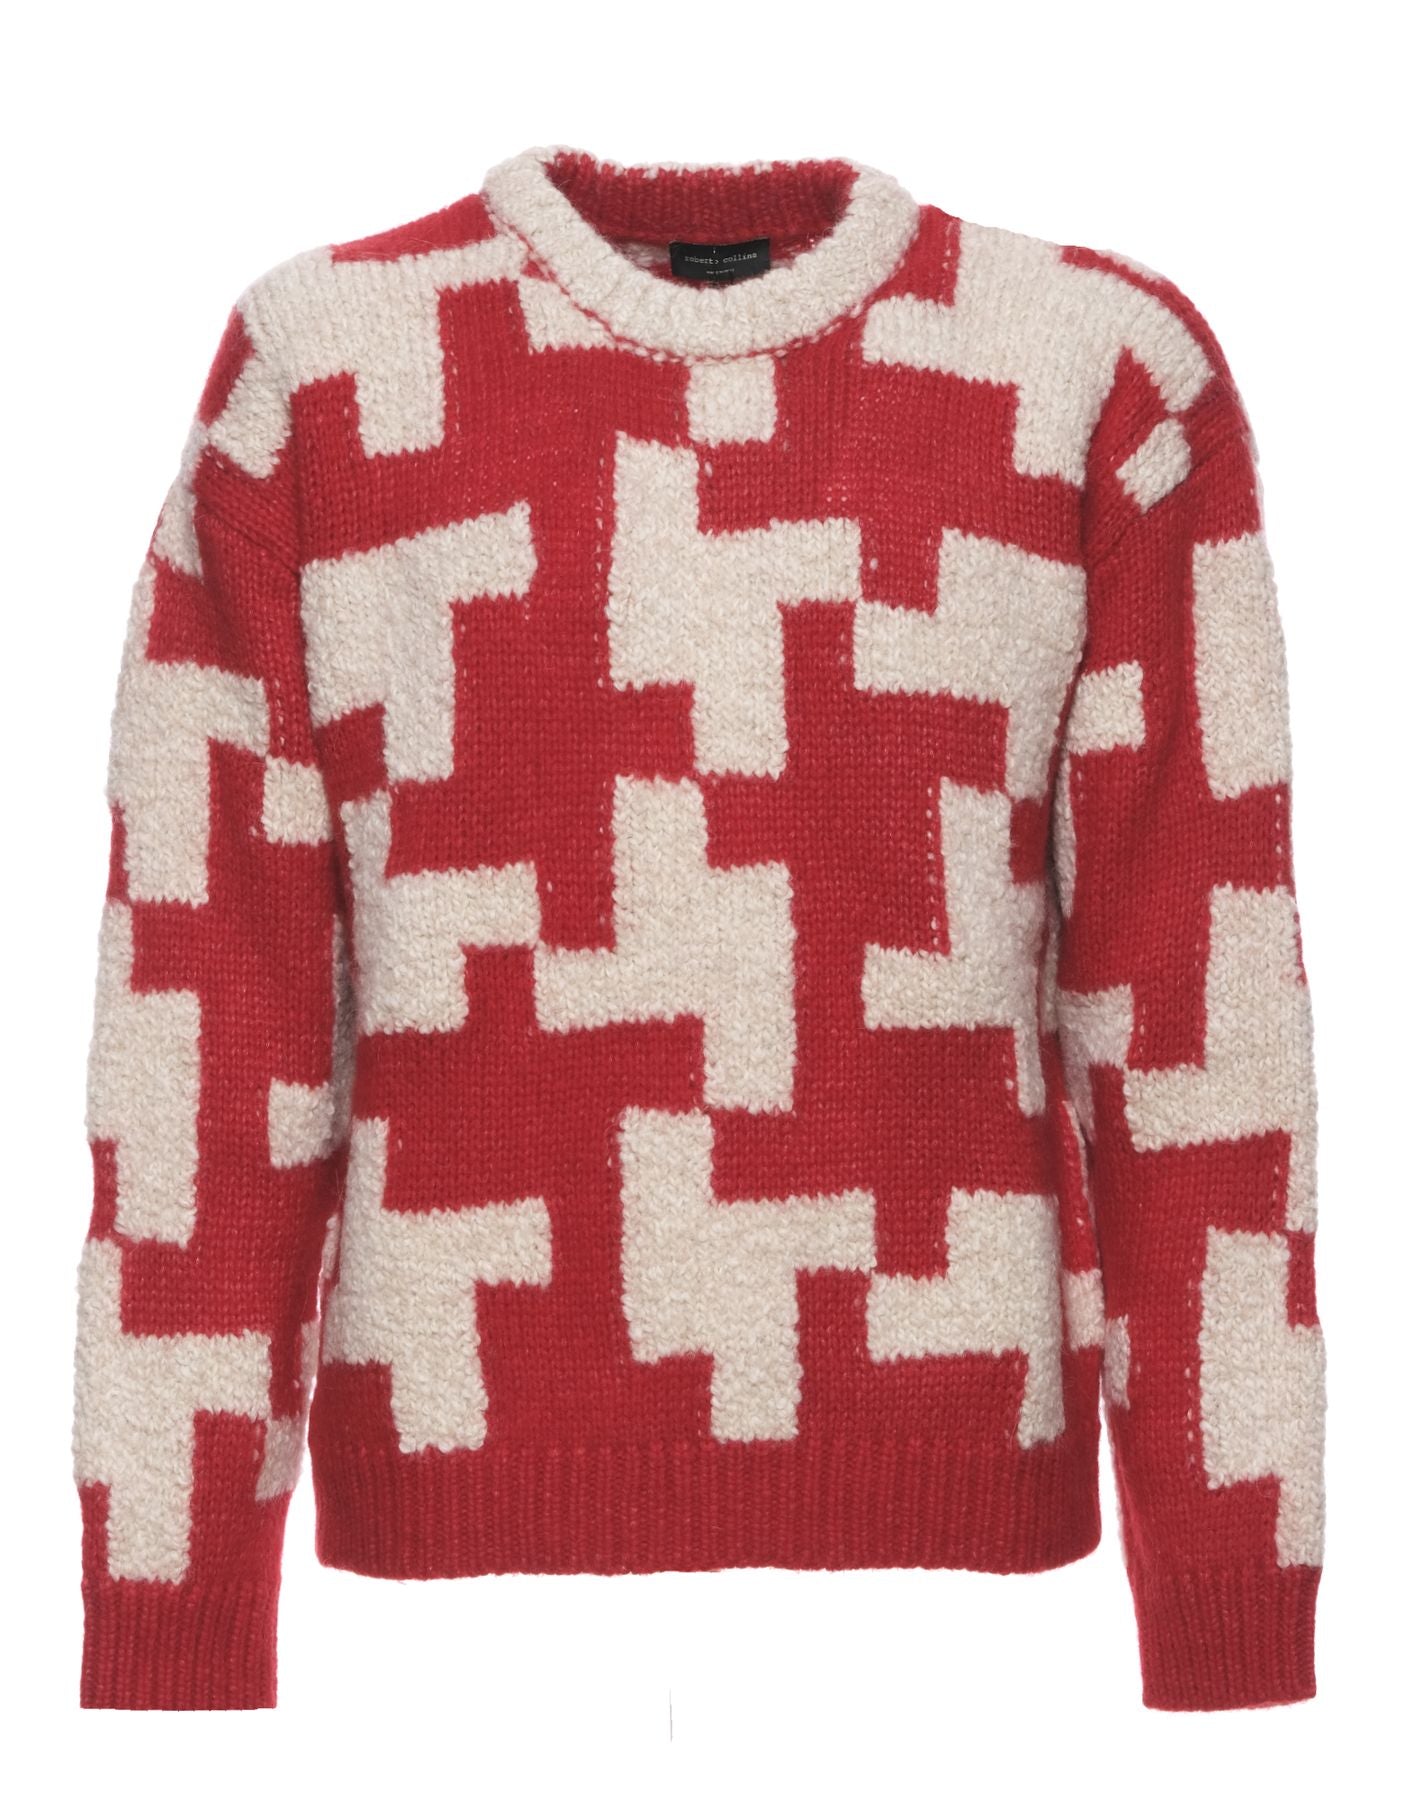 Sweater for man RP46001 38 RED ECRU ROBERTO COLLINA